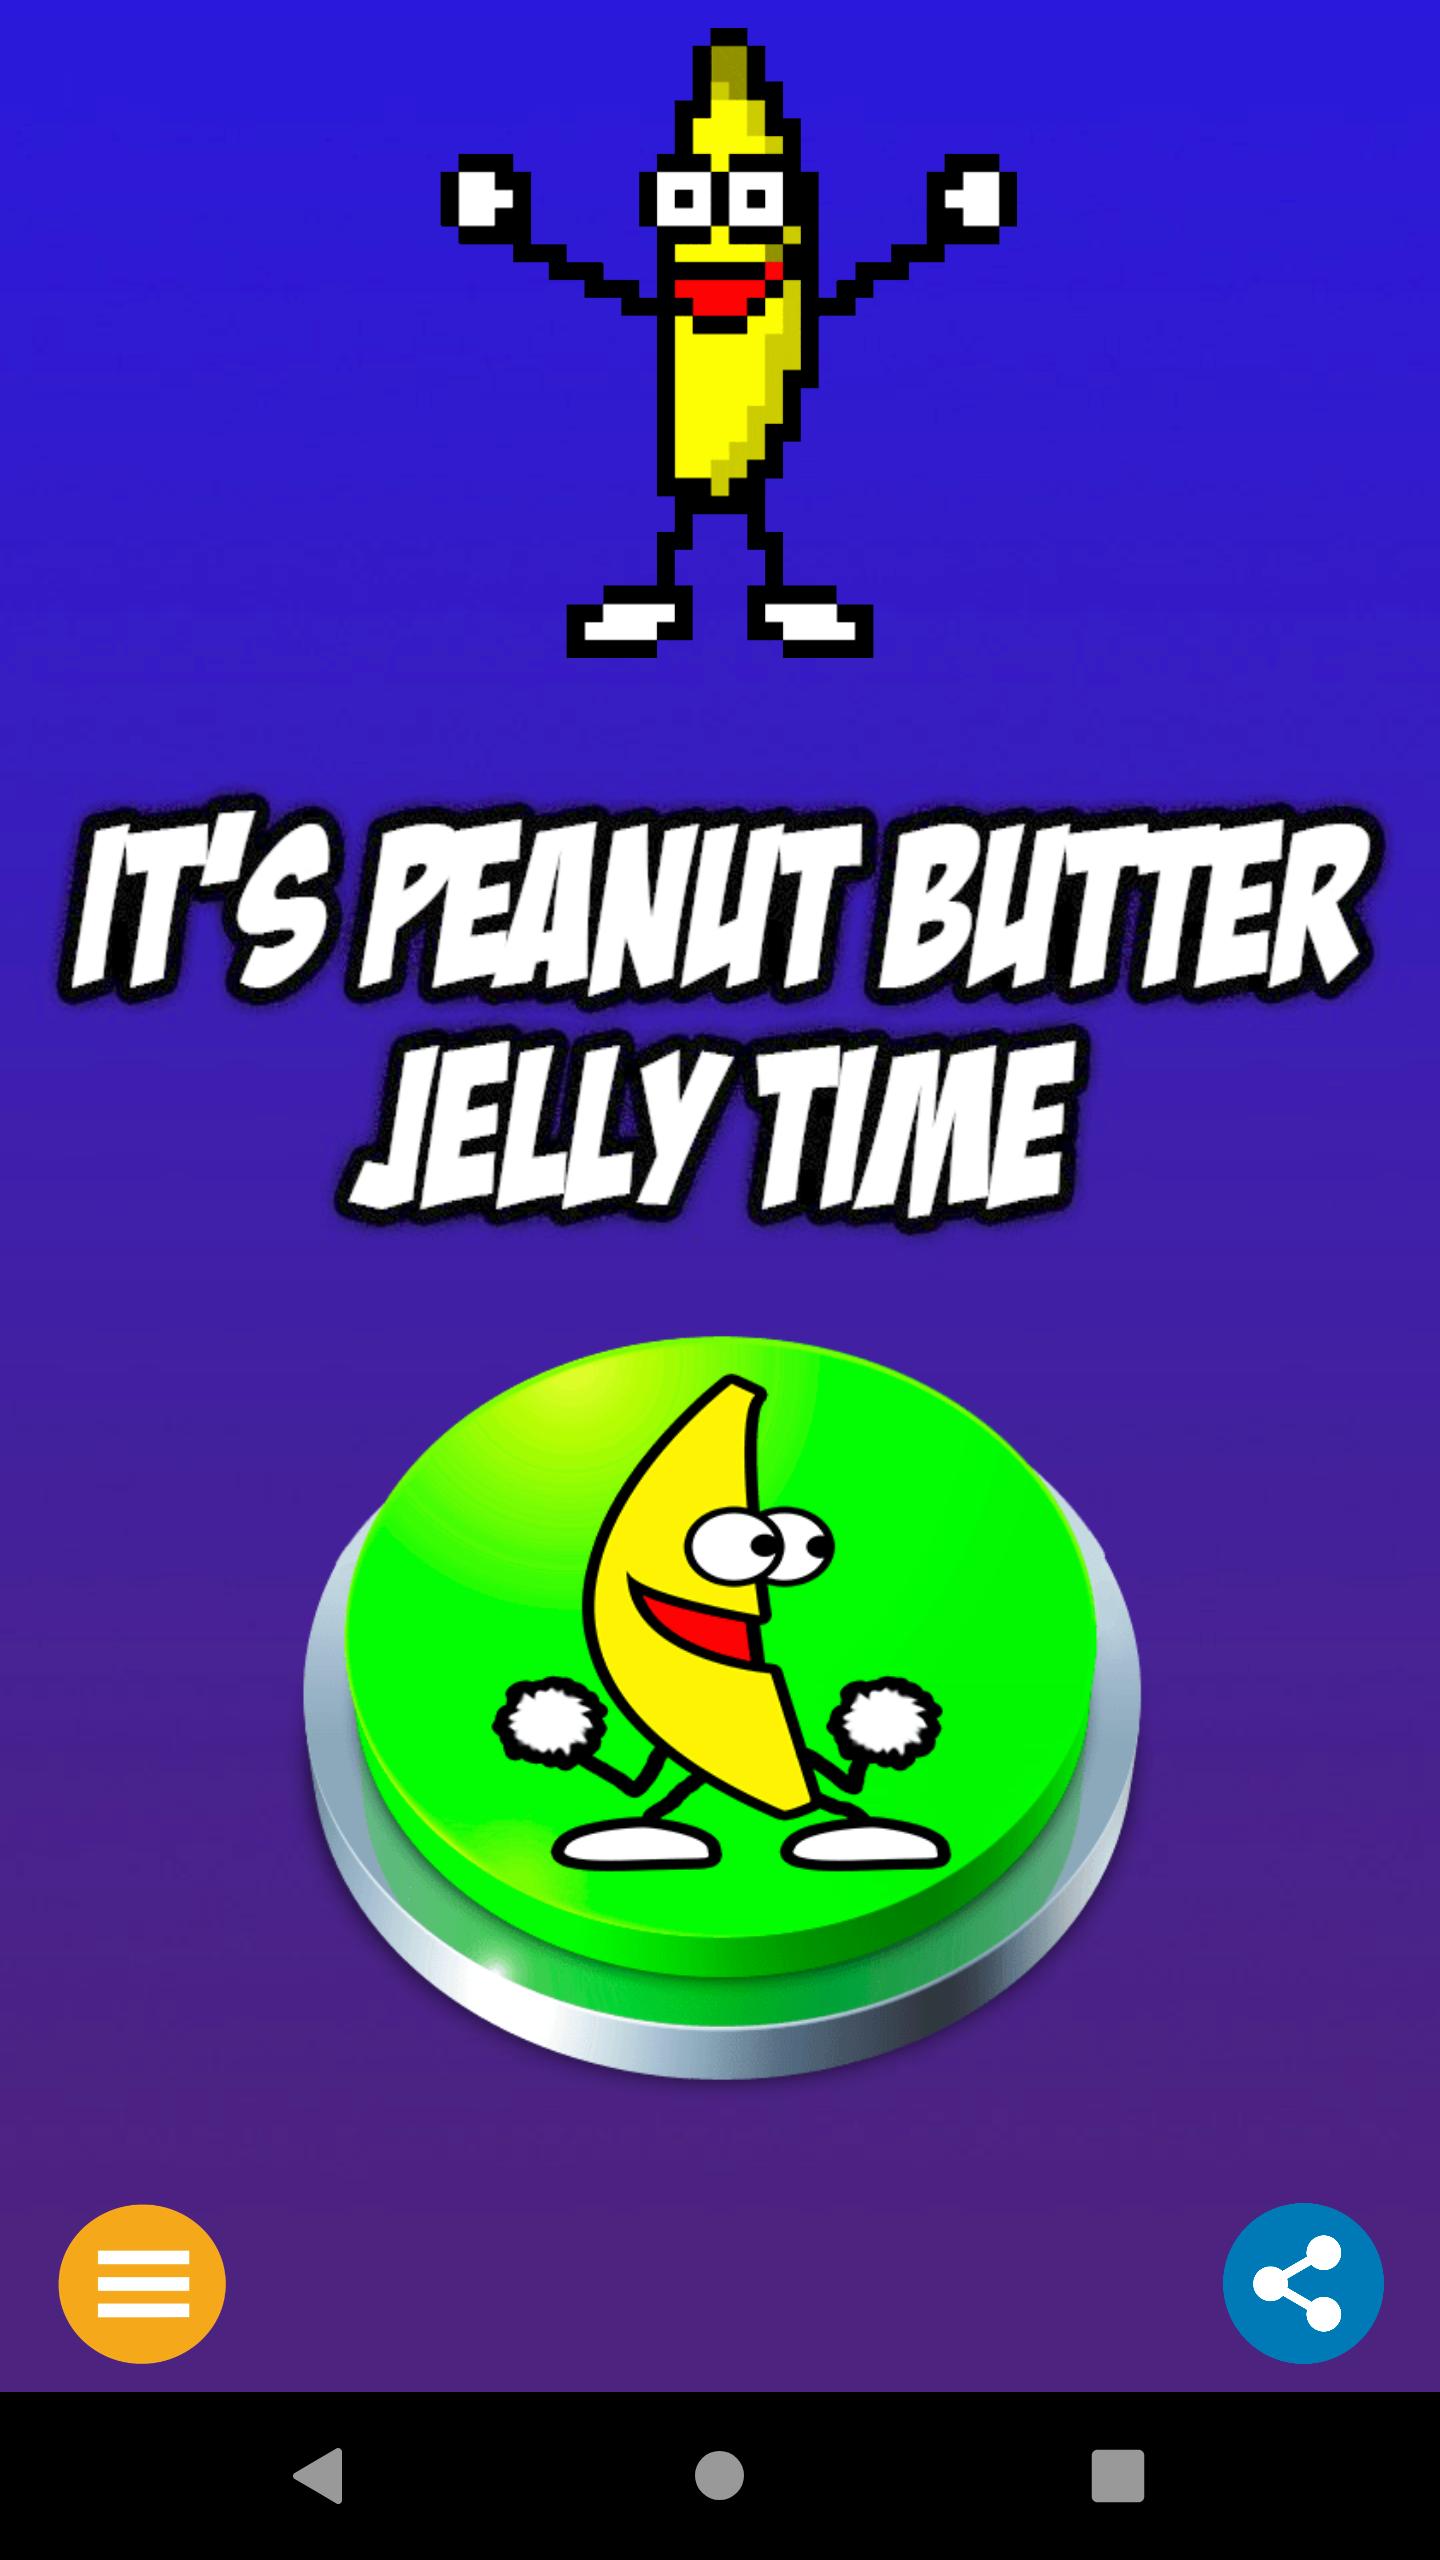 Banana Jelly time. Peanut Jelly time. Peanut Butter Jelly time меме. Peanut Butter Jelly time Roblox. Jelly time